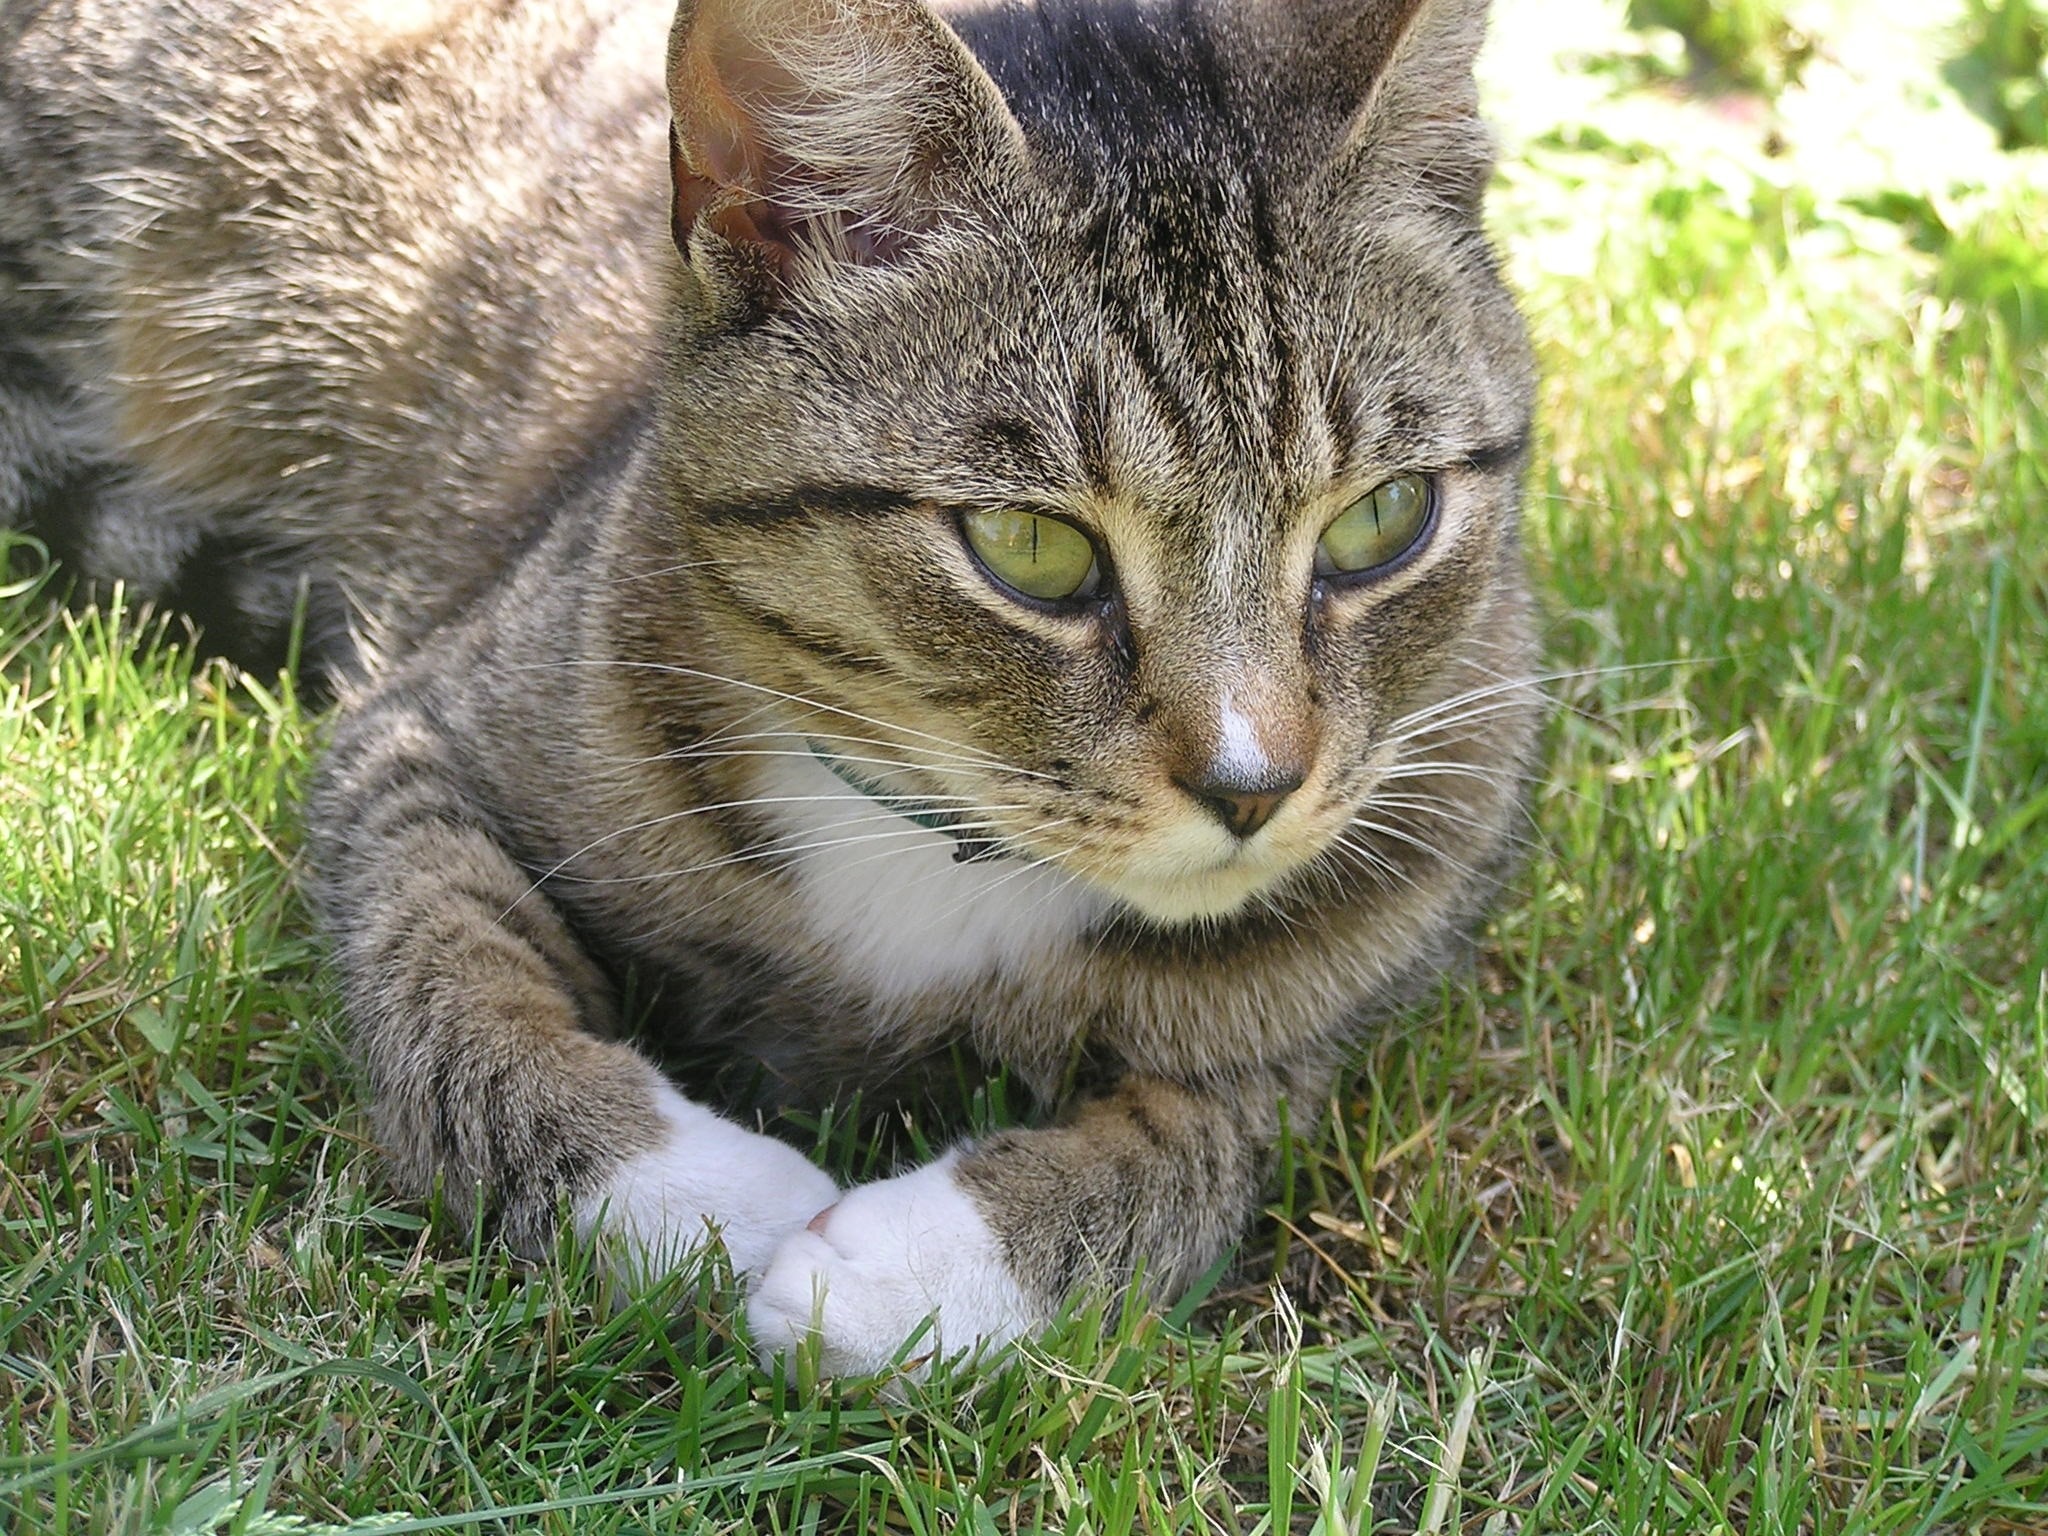 Cat'S Eyes, Pet, Kitten, Cat, Eyes, Look, domestic cat, grass